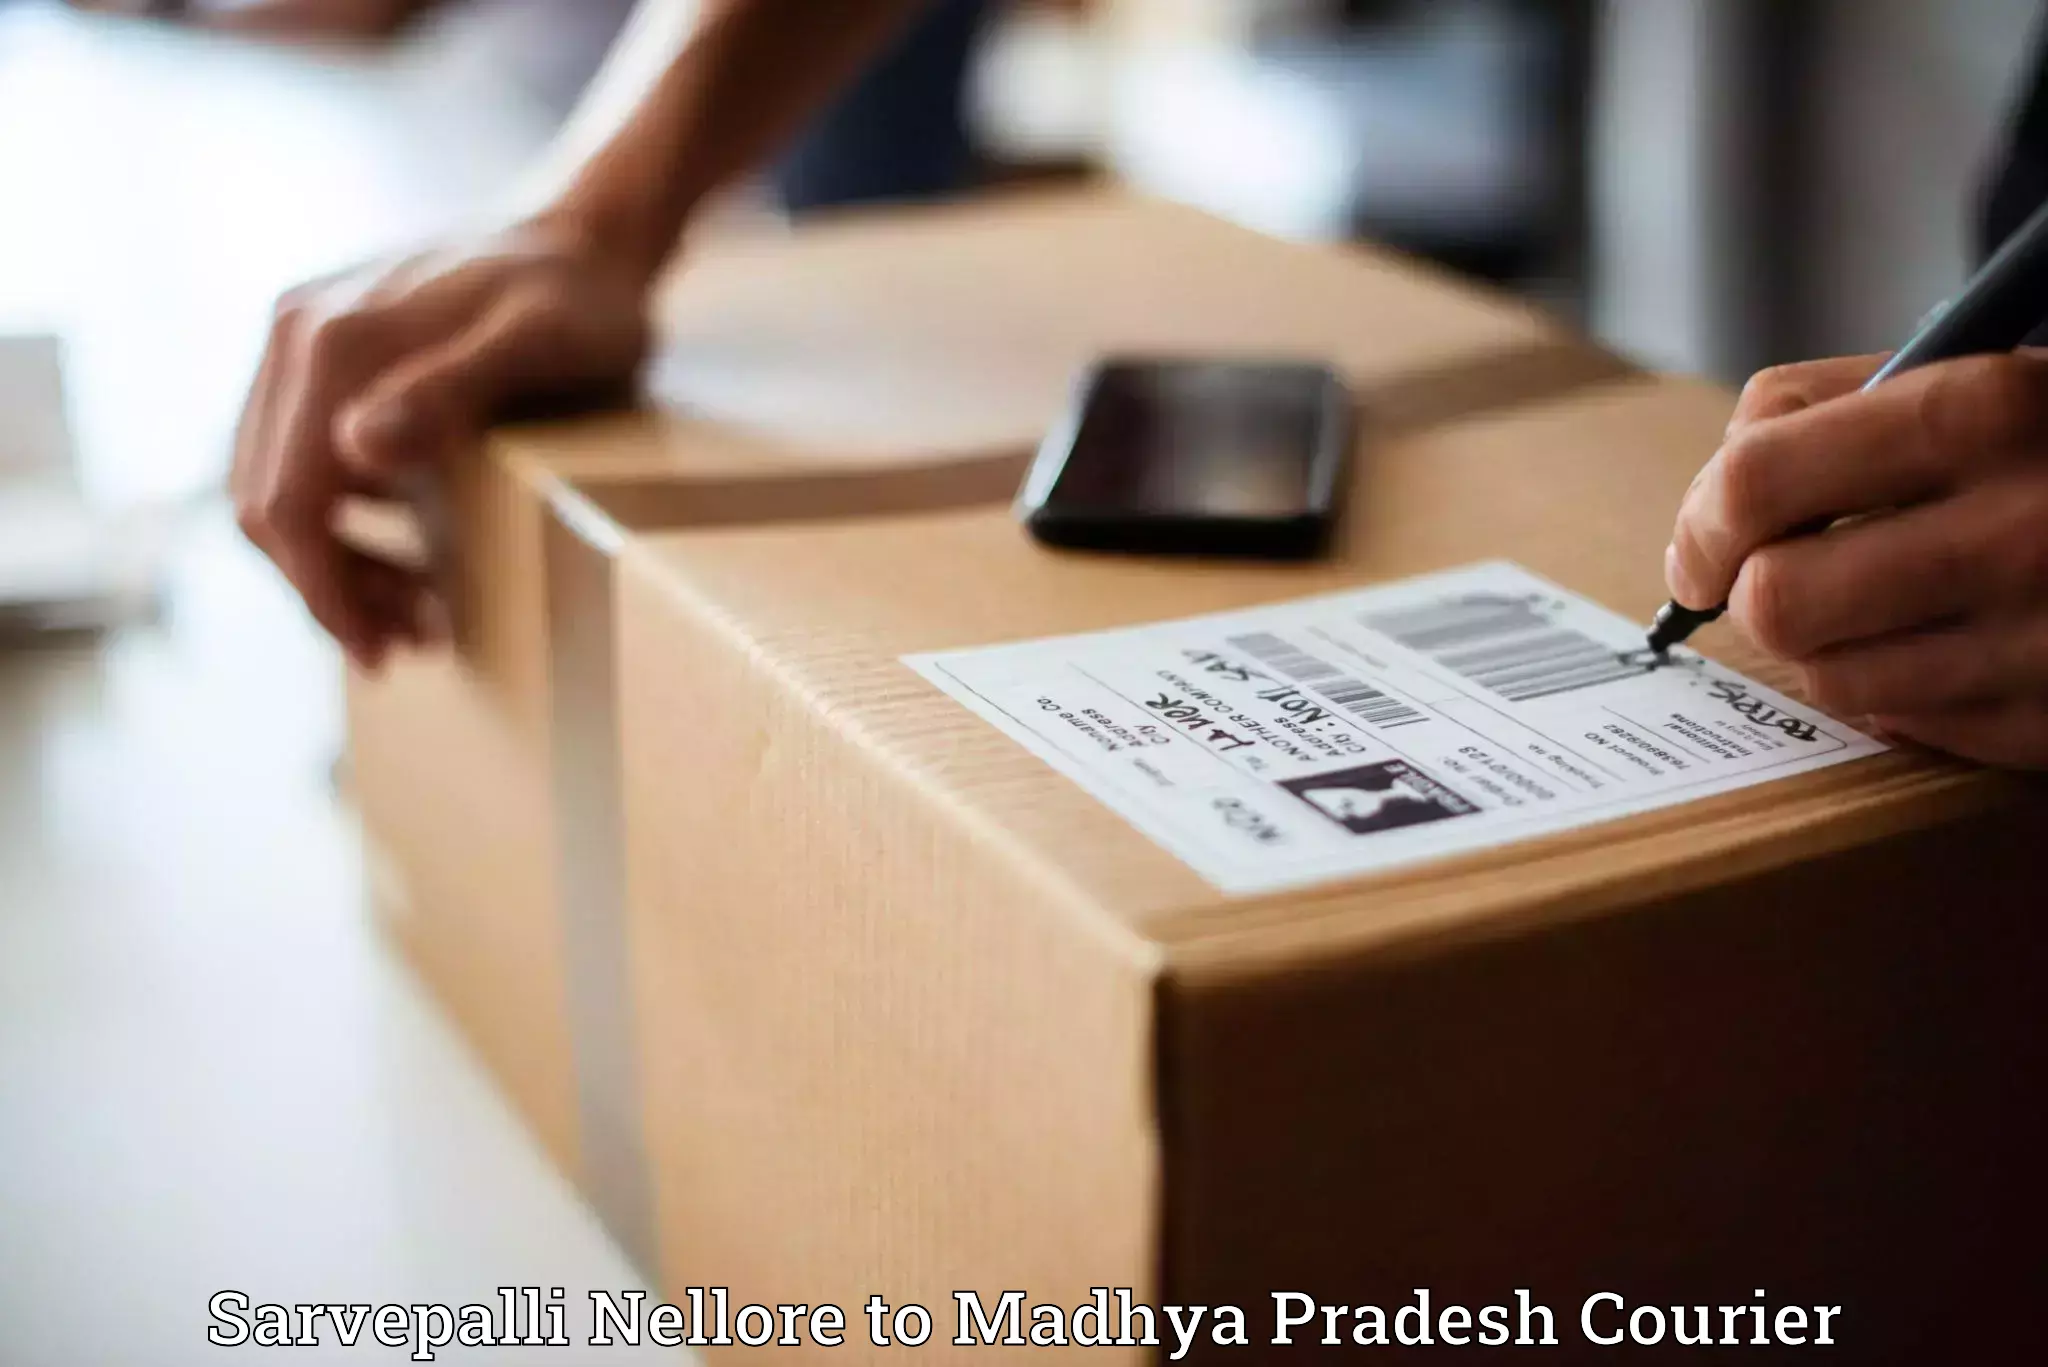 Personalized courier experiences Sarvepalli Nellore to Madhya Pradesh